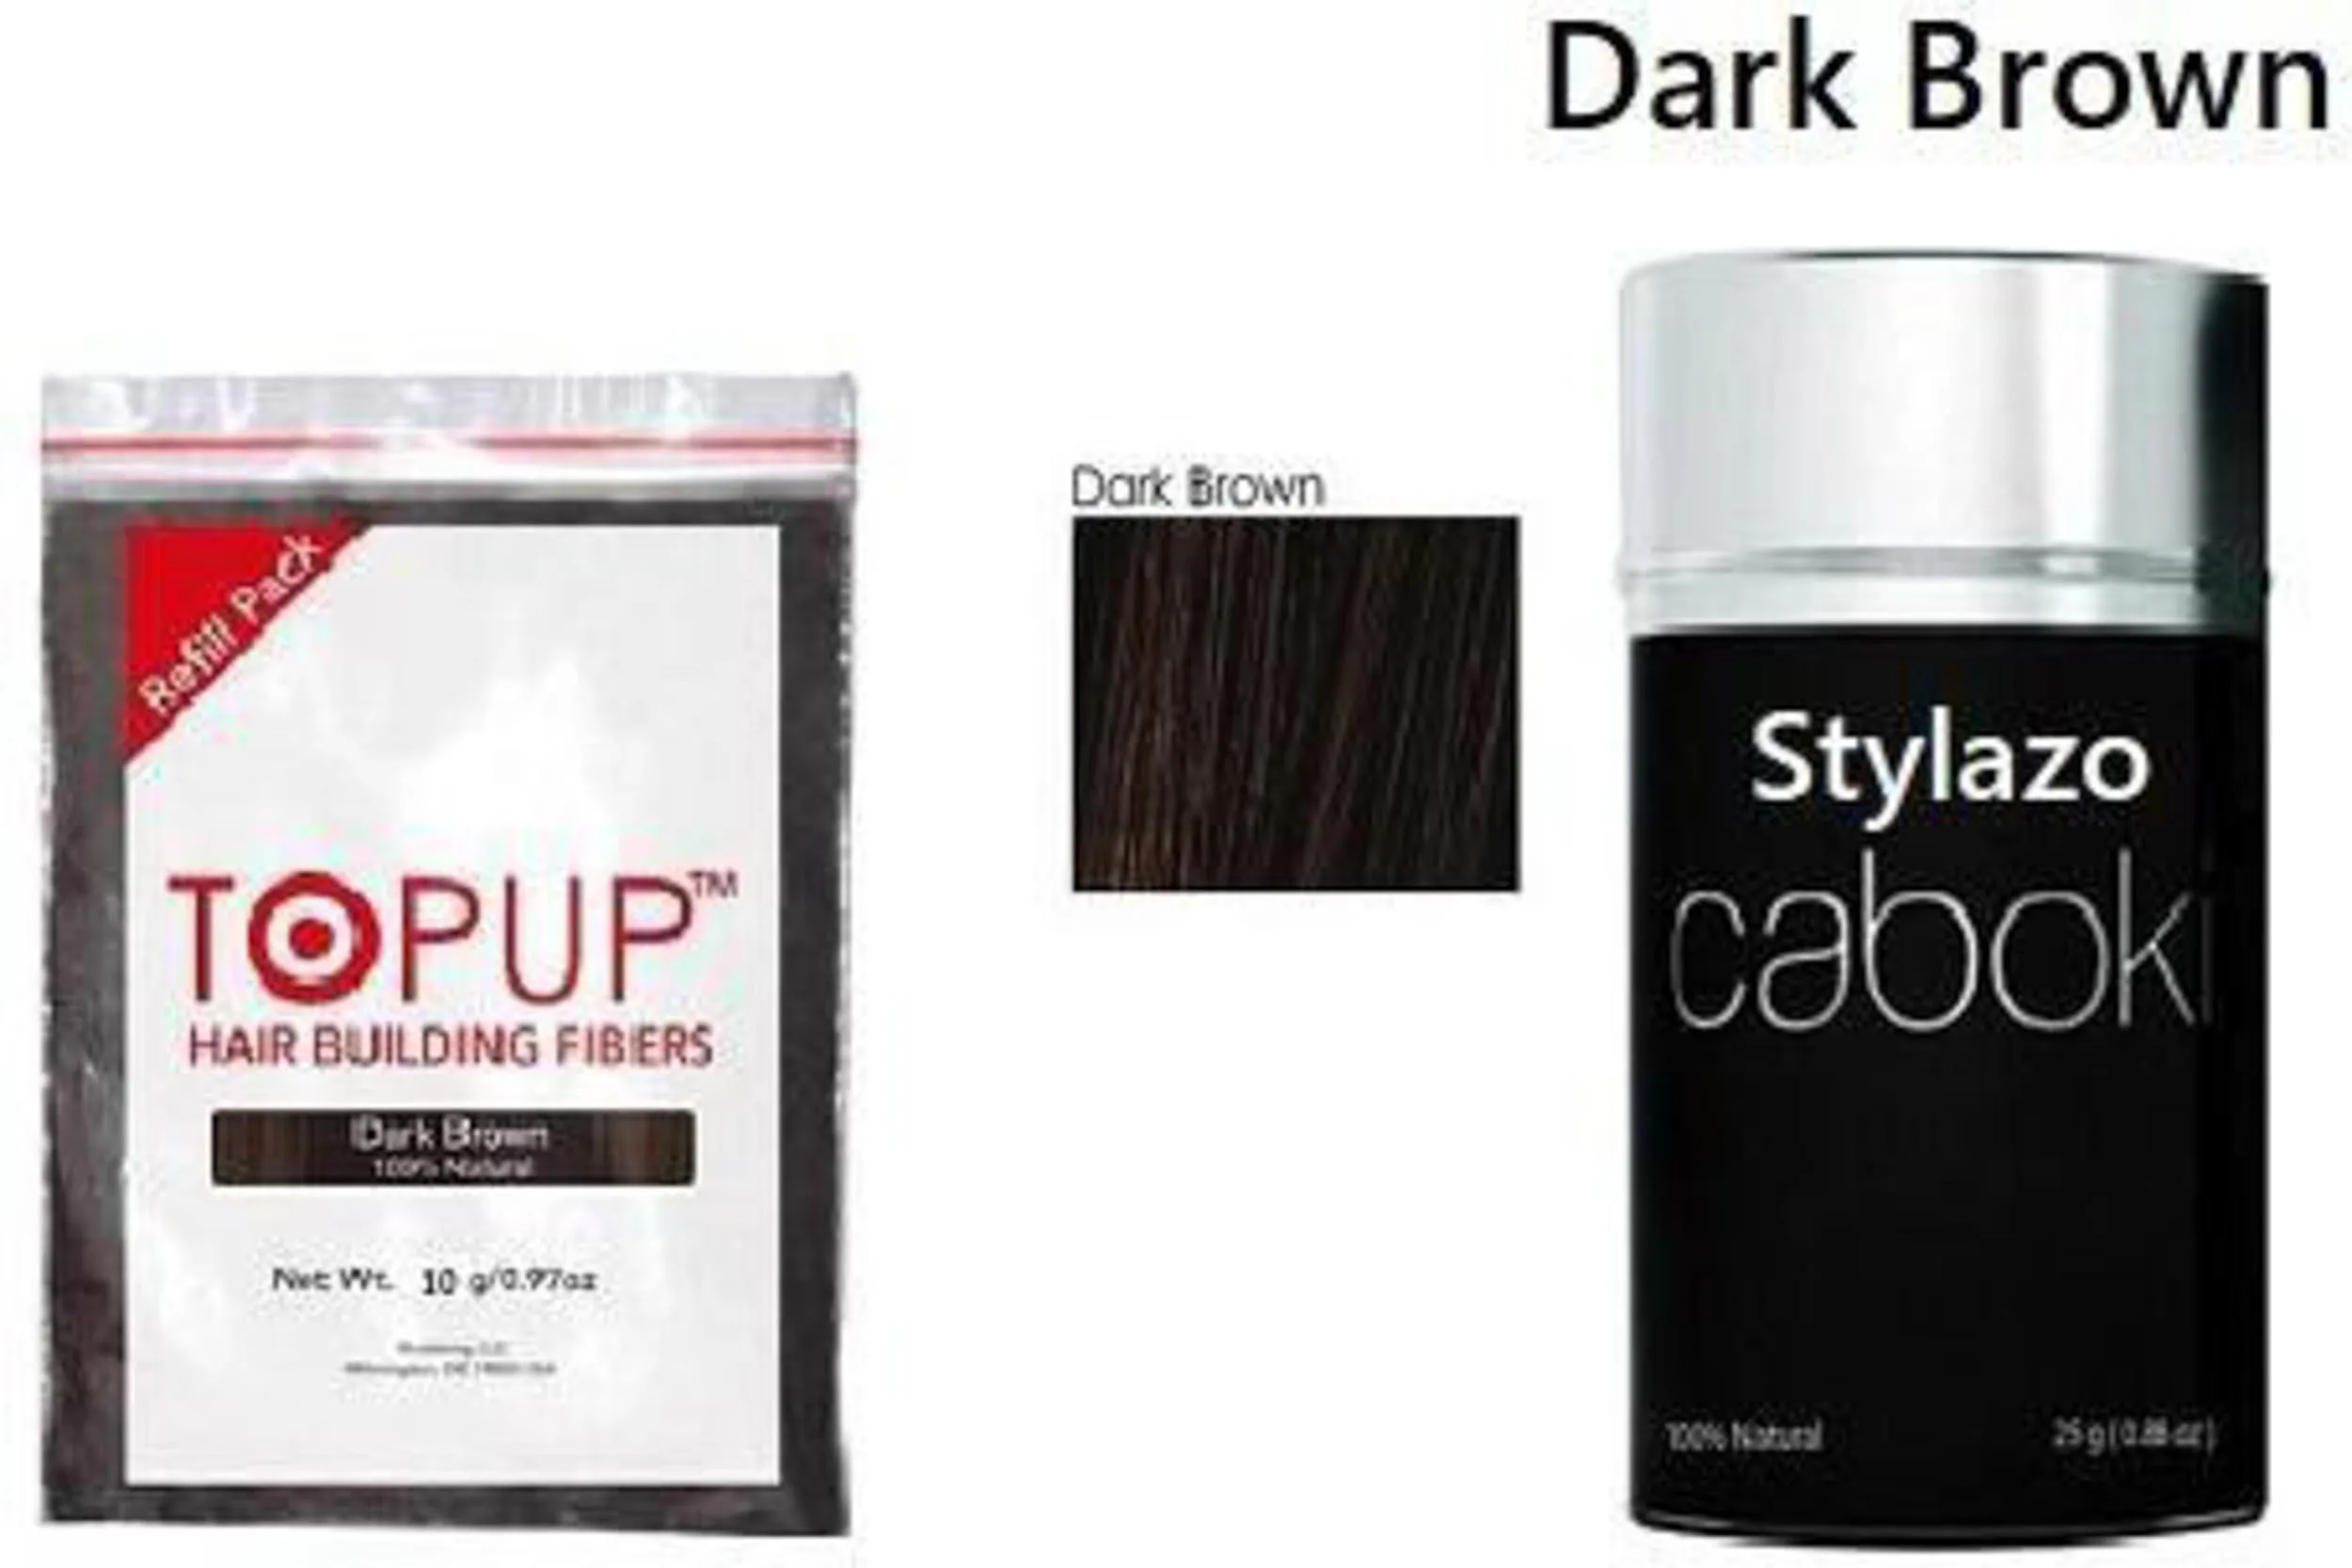 Stylazo Dark Brown Hair Building Fiber With Refill Bag 35 g (Pack of 2) -  JioMart